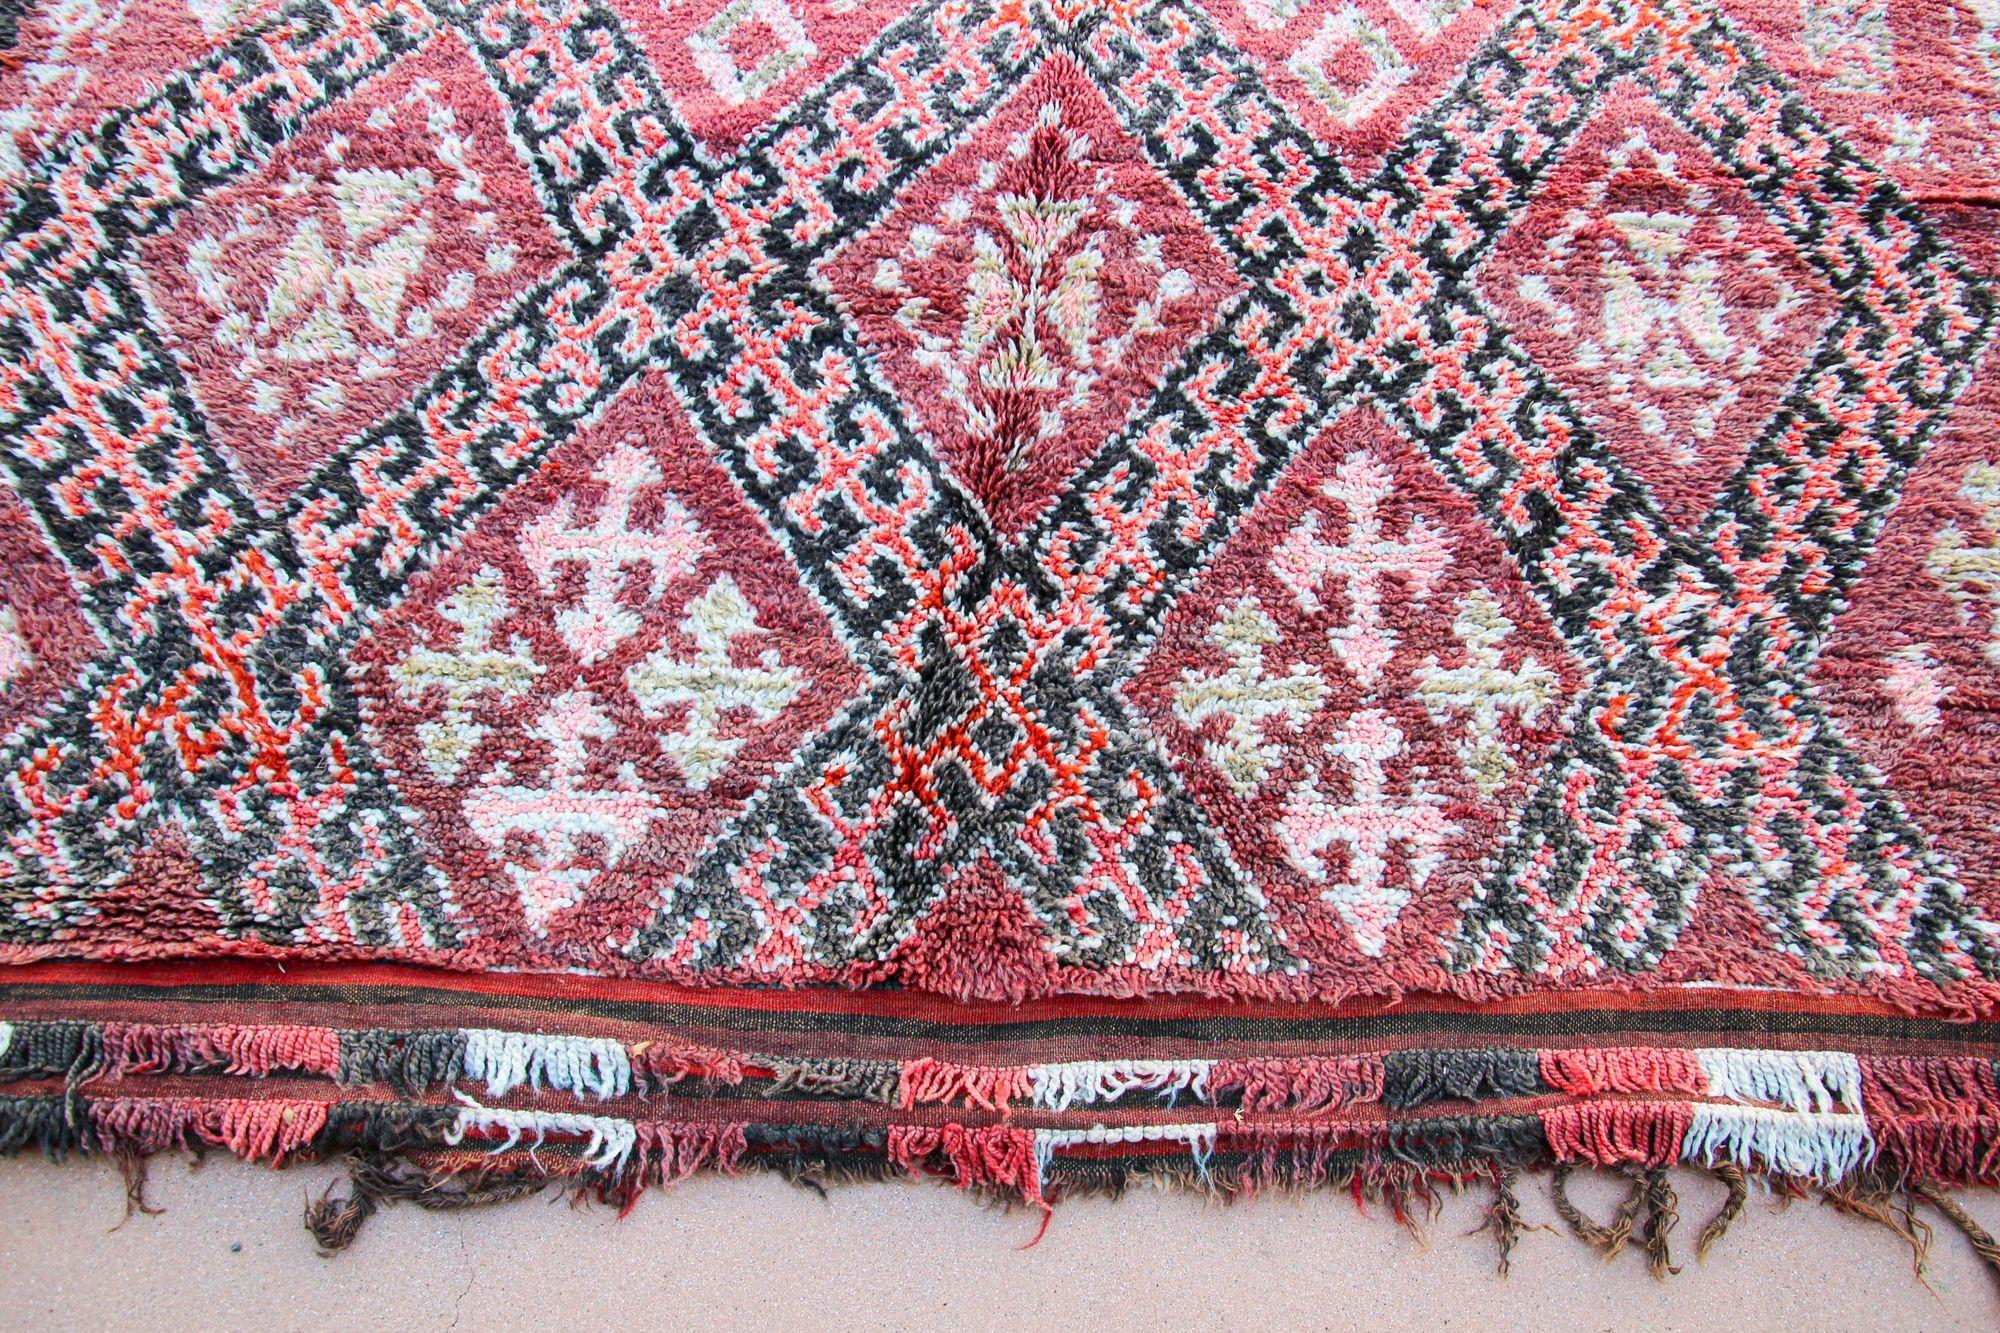 Folk Art 1960s Moroccan Berber Rug Pink Vintage Rehmana Marrakech Carpet For Sale